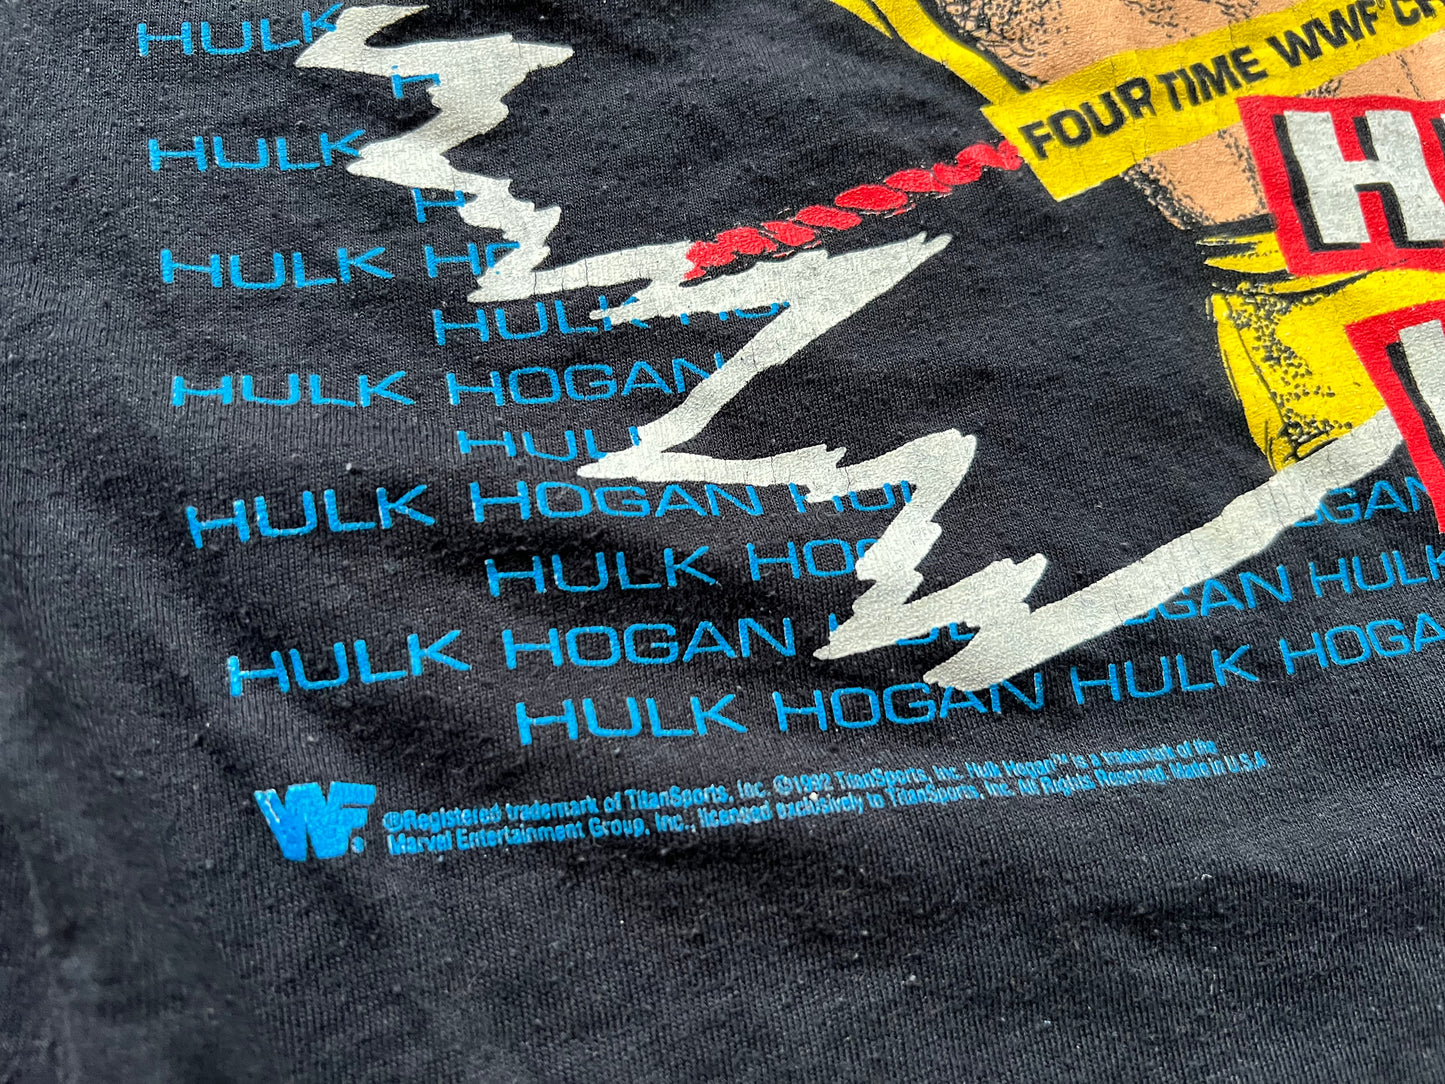 1992 WWF “Four Time World Wrestling Federation Champion” Hulk Hogan shirt